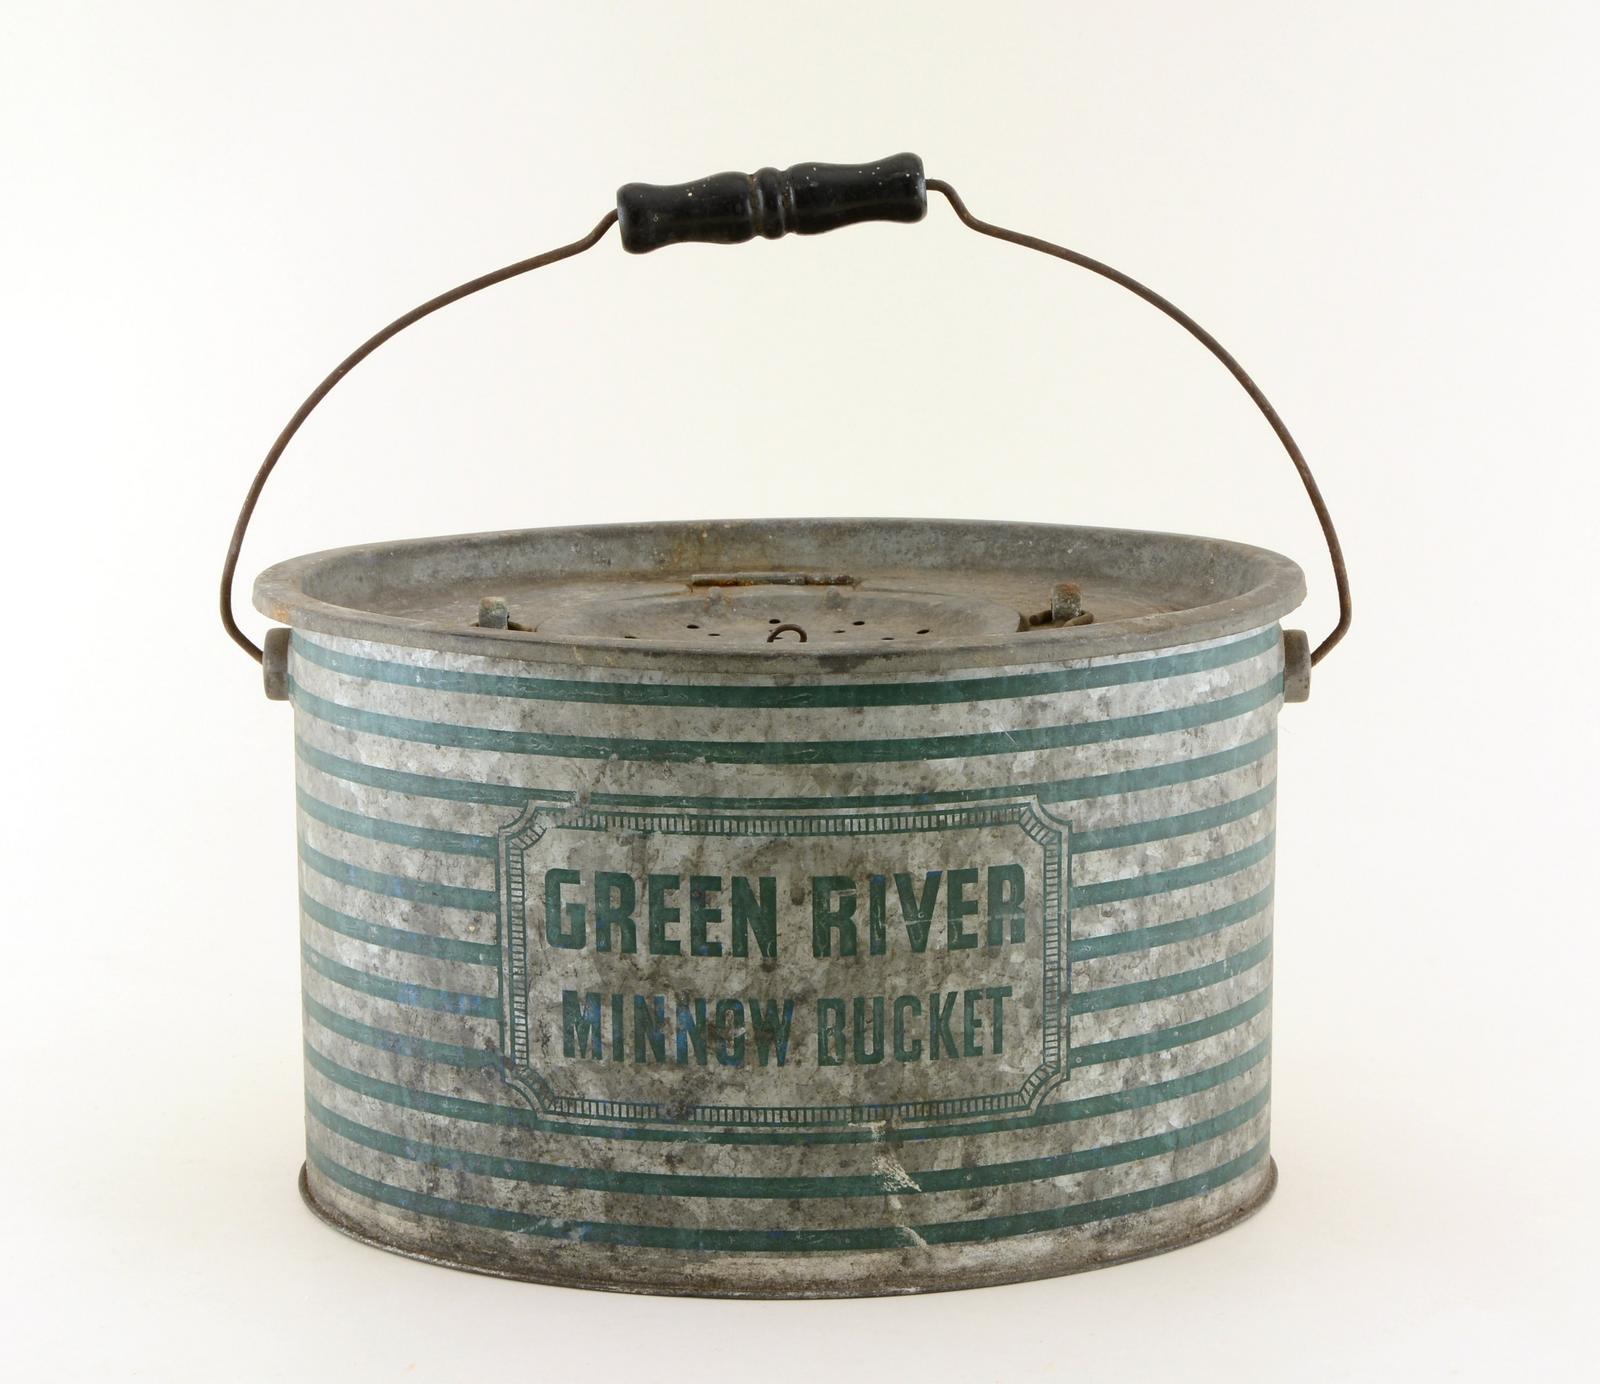 Vintage Green River Oval Minnow Bucket